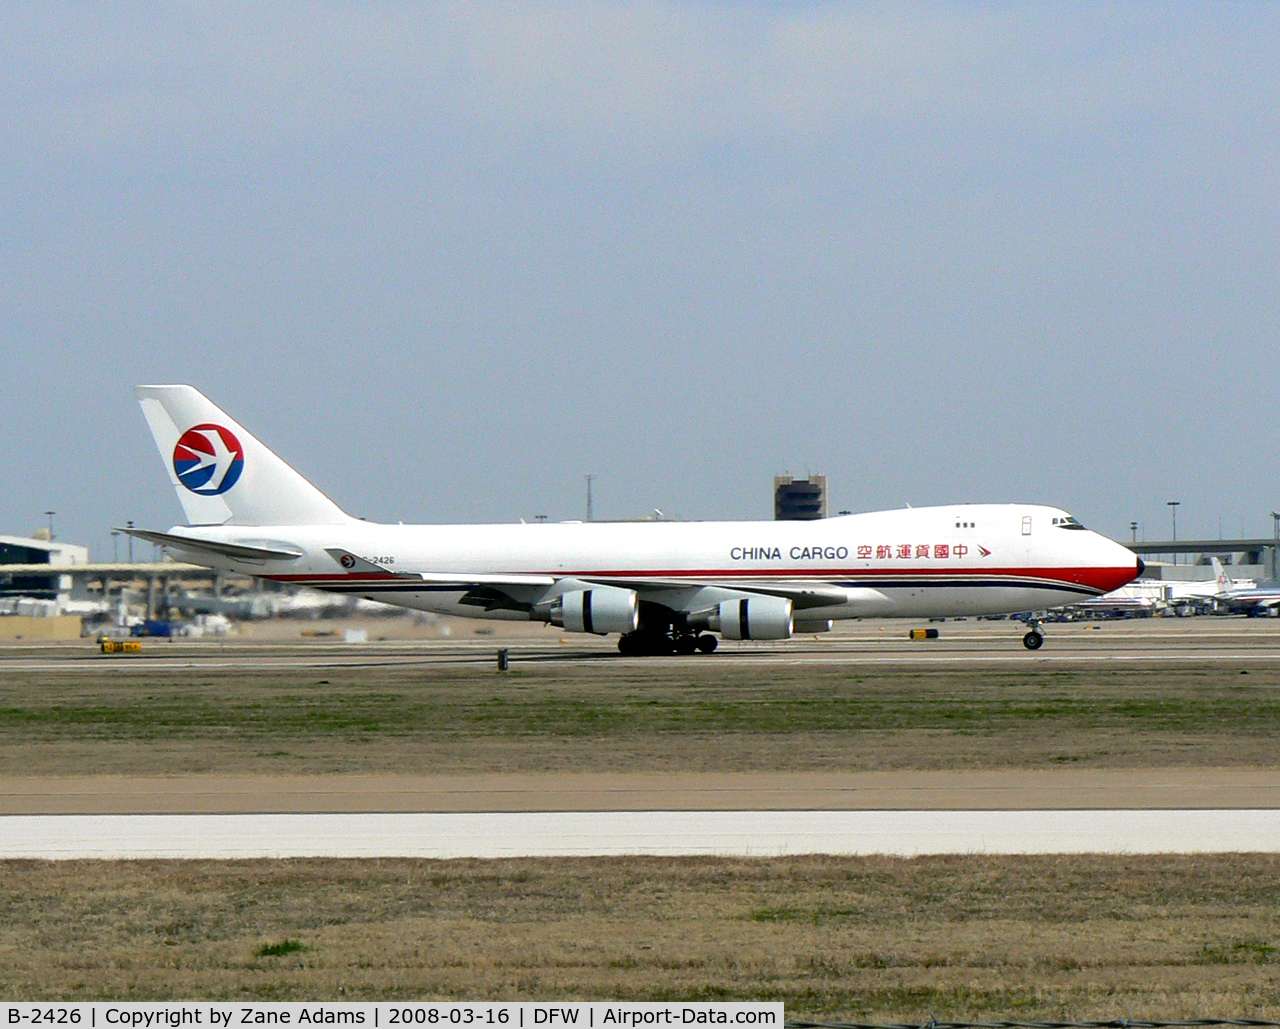 B-2426, 2007 Boeing 747-40BF/ER/SCD C/N 35208/1392, China Cargo landing on 18R at DFW (good crosswind - notice rudder)